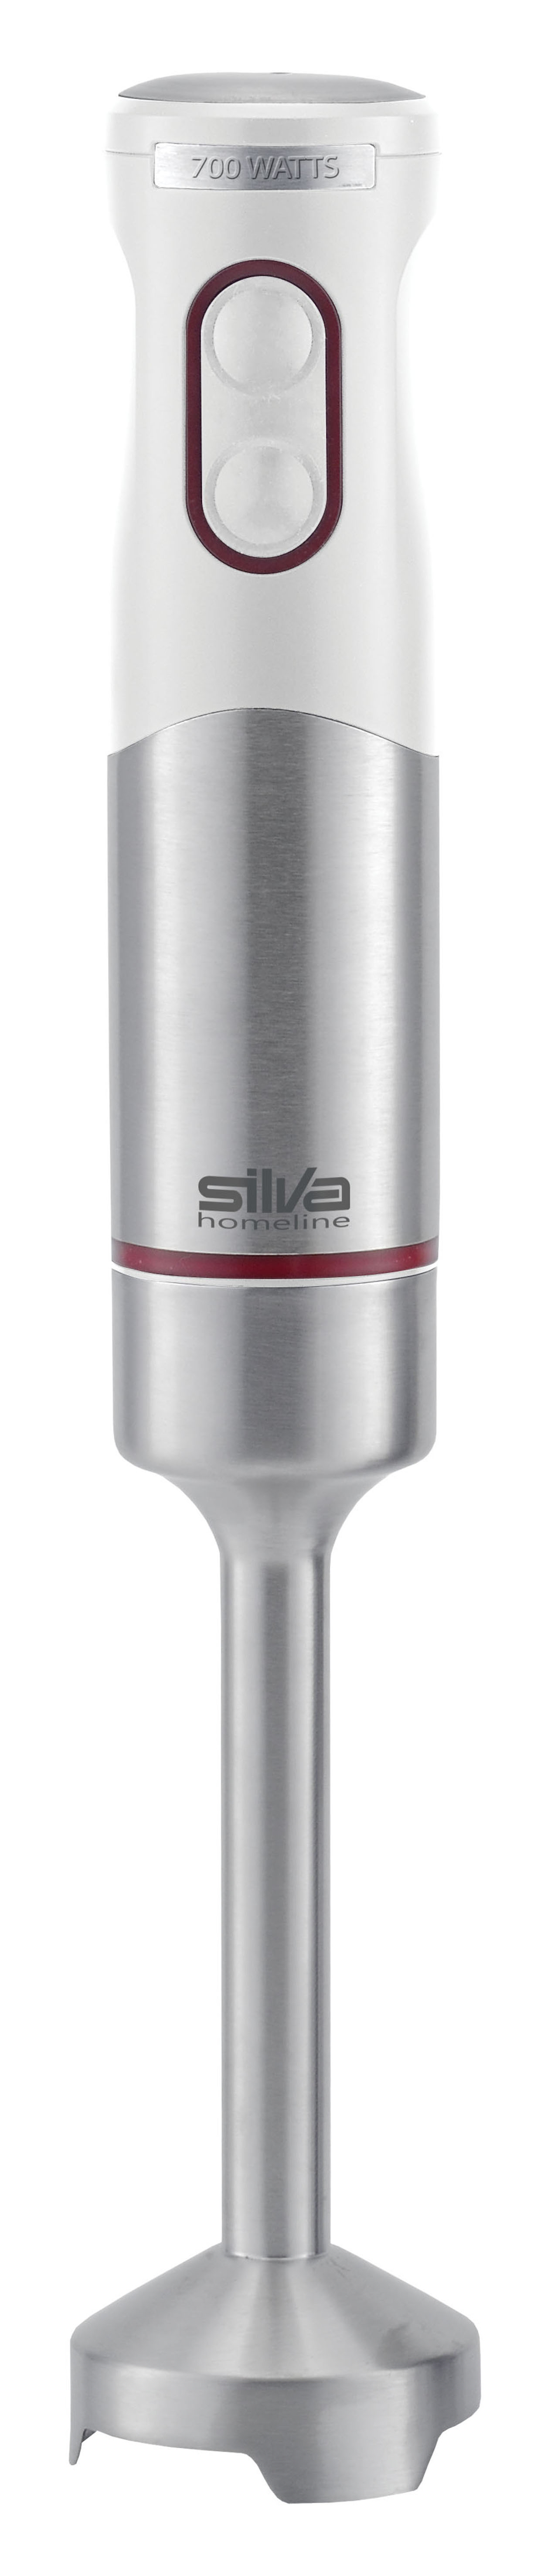 SILVA-HOMELINE SMS Watt, 6501 500 (700 Edelstahl/Weiß ml) Stabmixer-Set